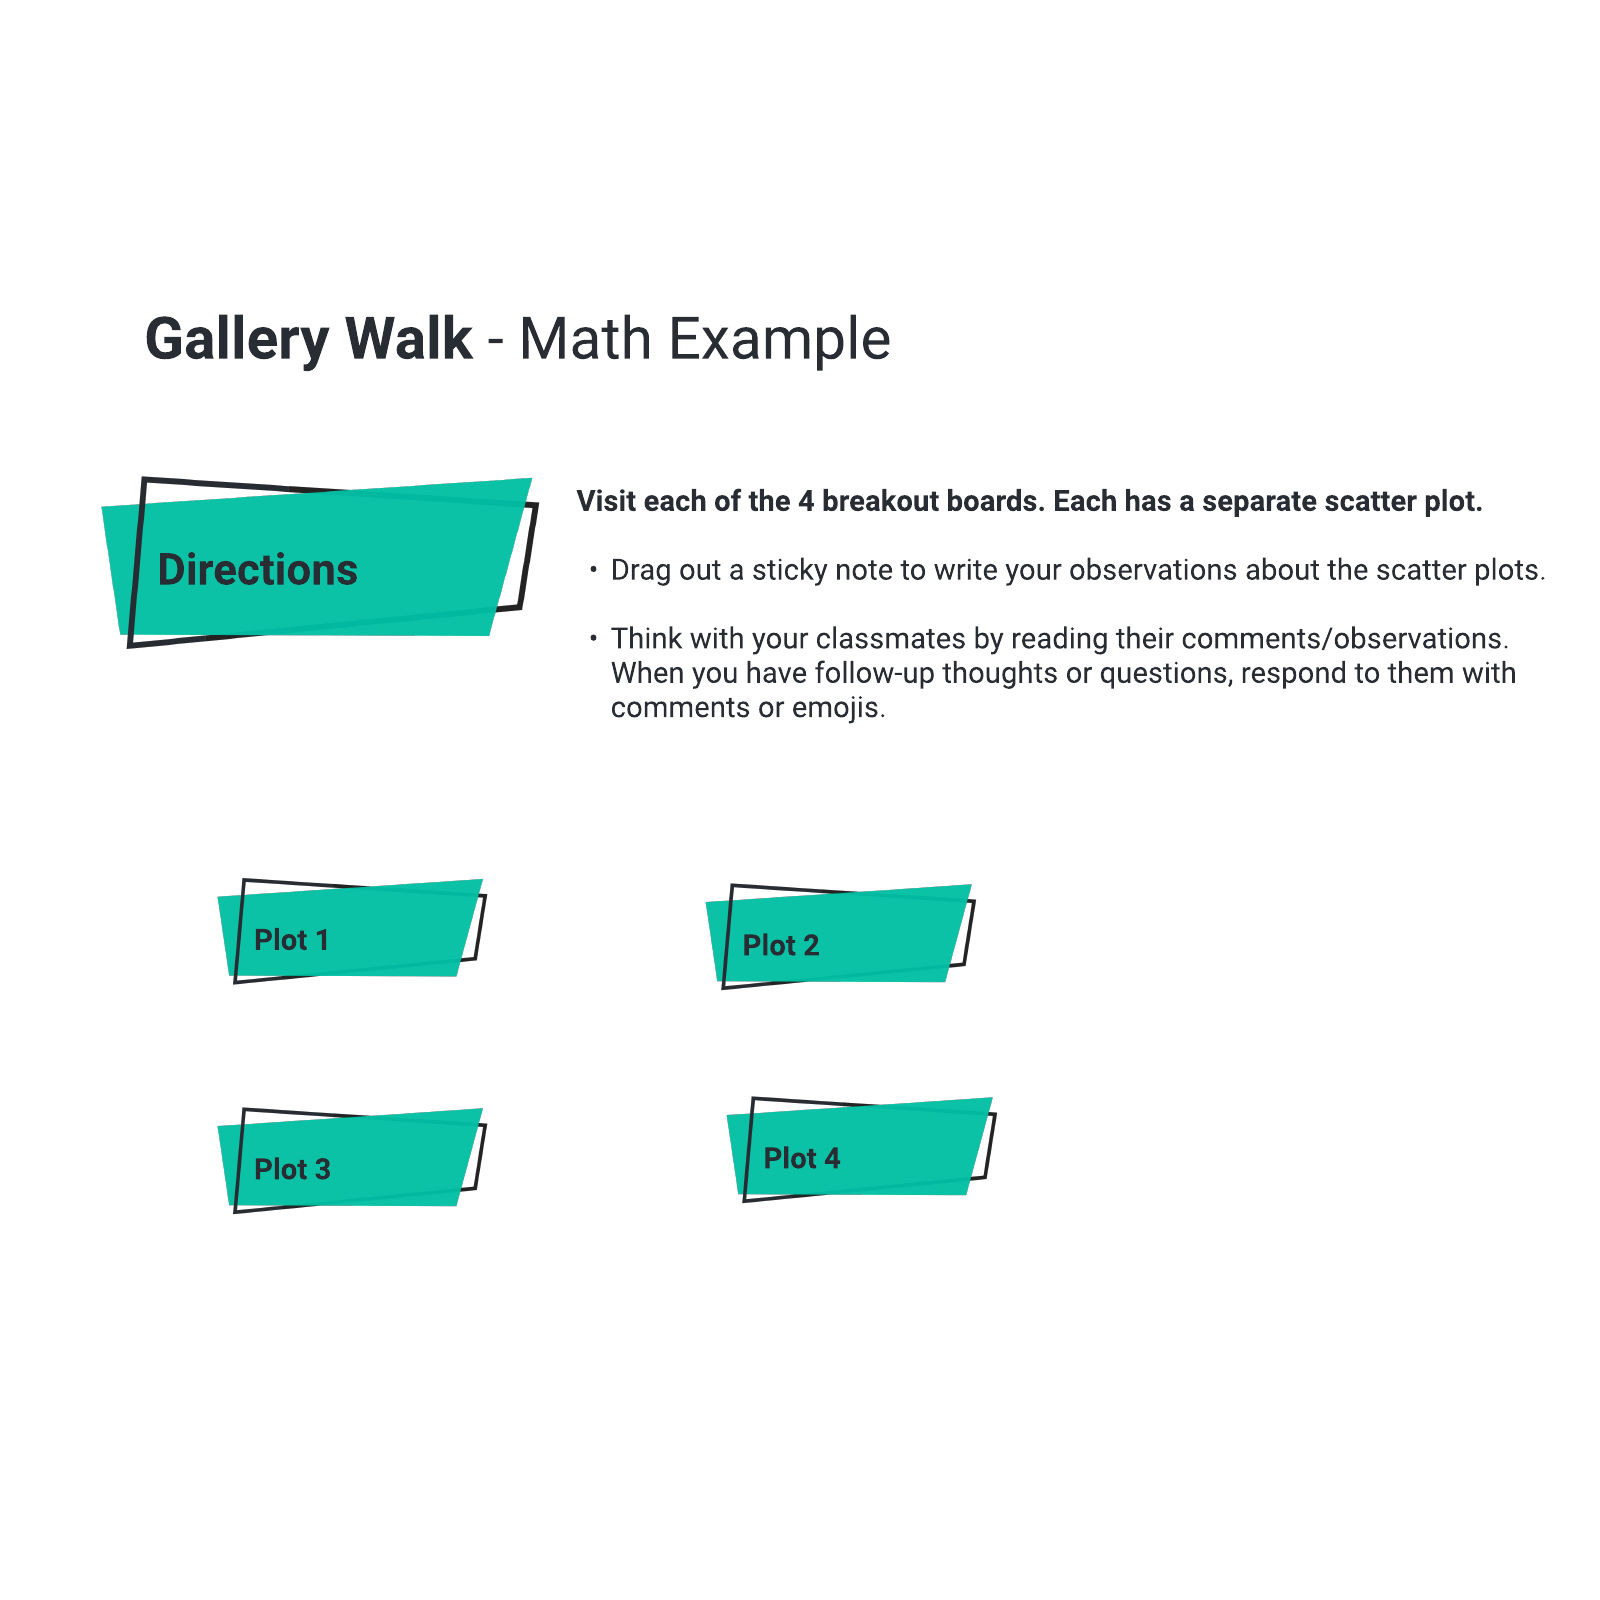 Gallery walk: Math example example